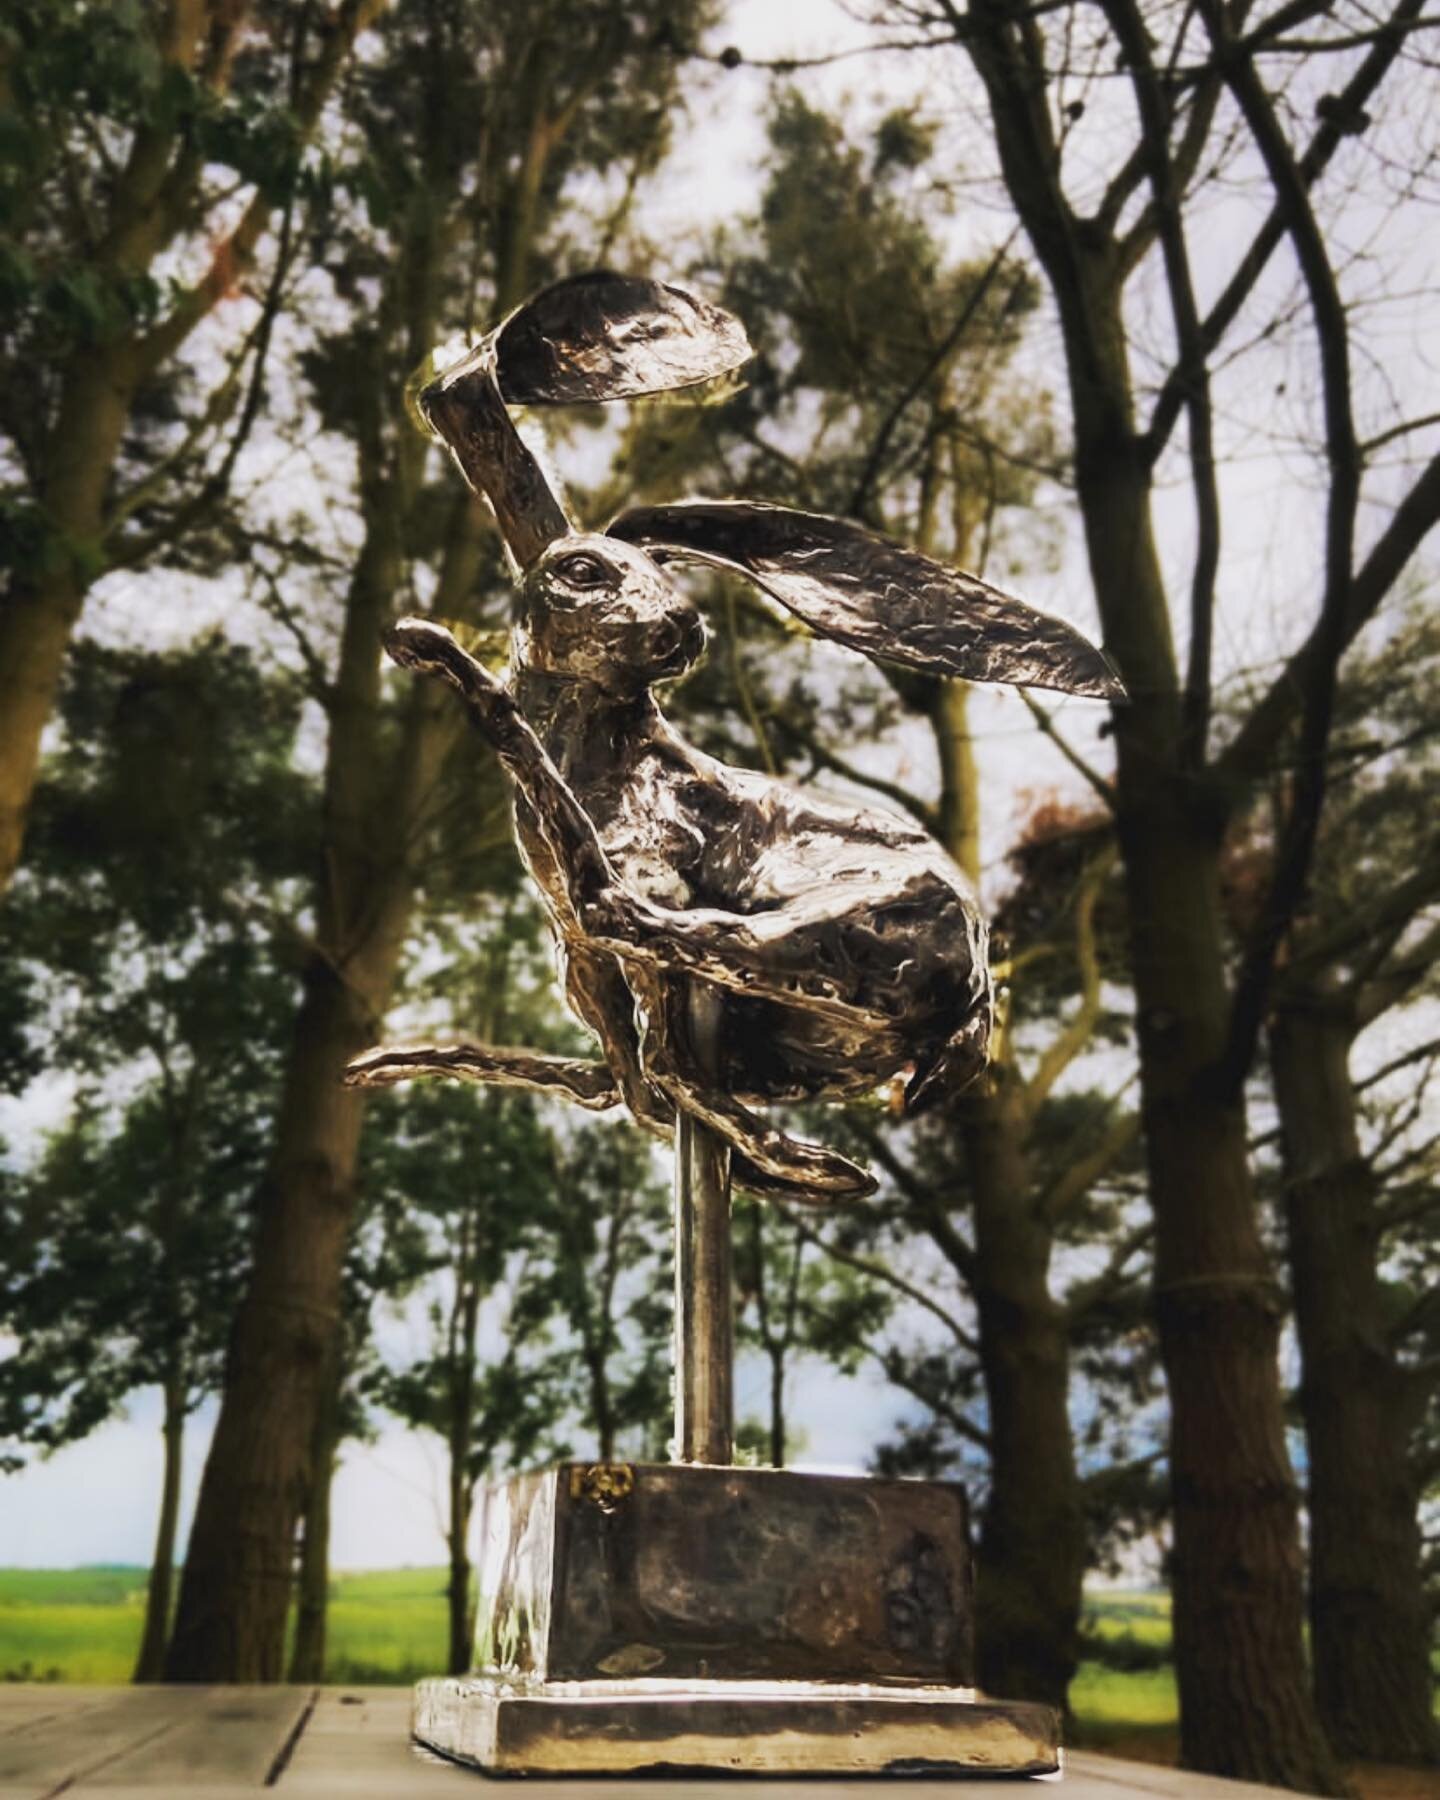 #hare #scuplture #bronze #silver #limmitededition #nature @dempseysculptures #uk #mistic #amazing